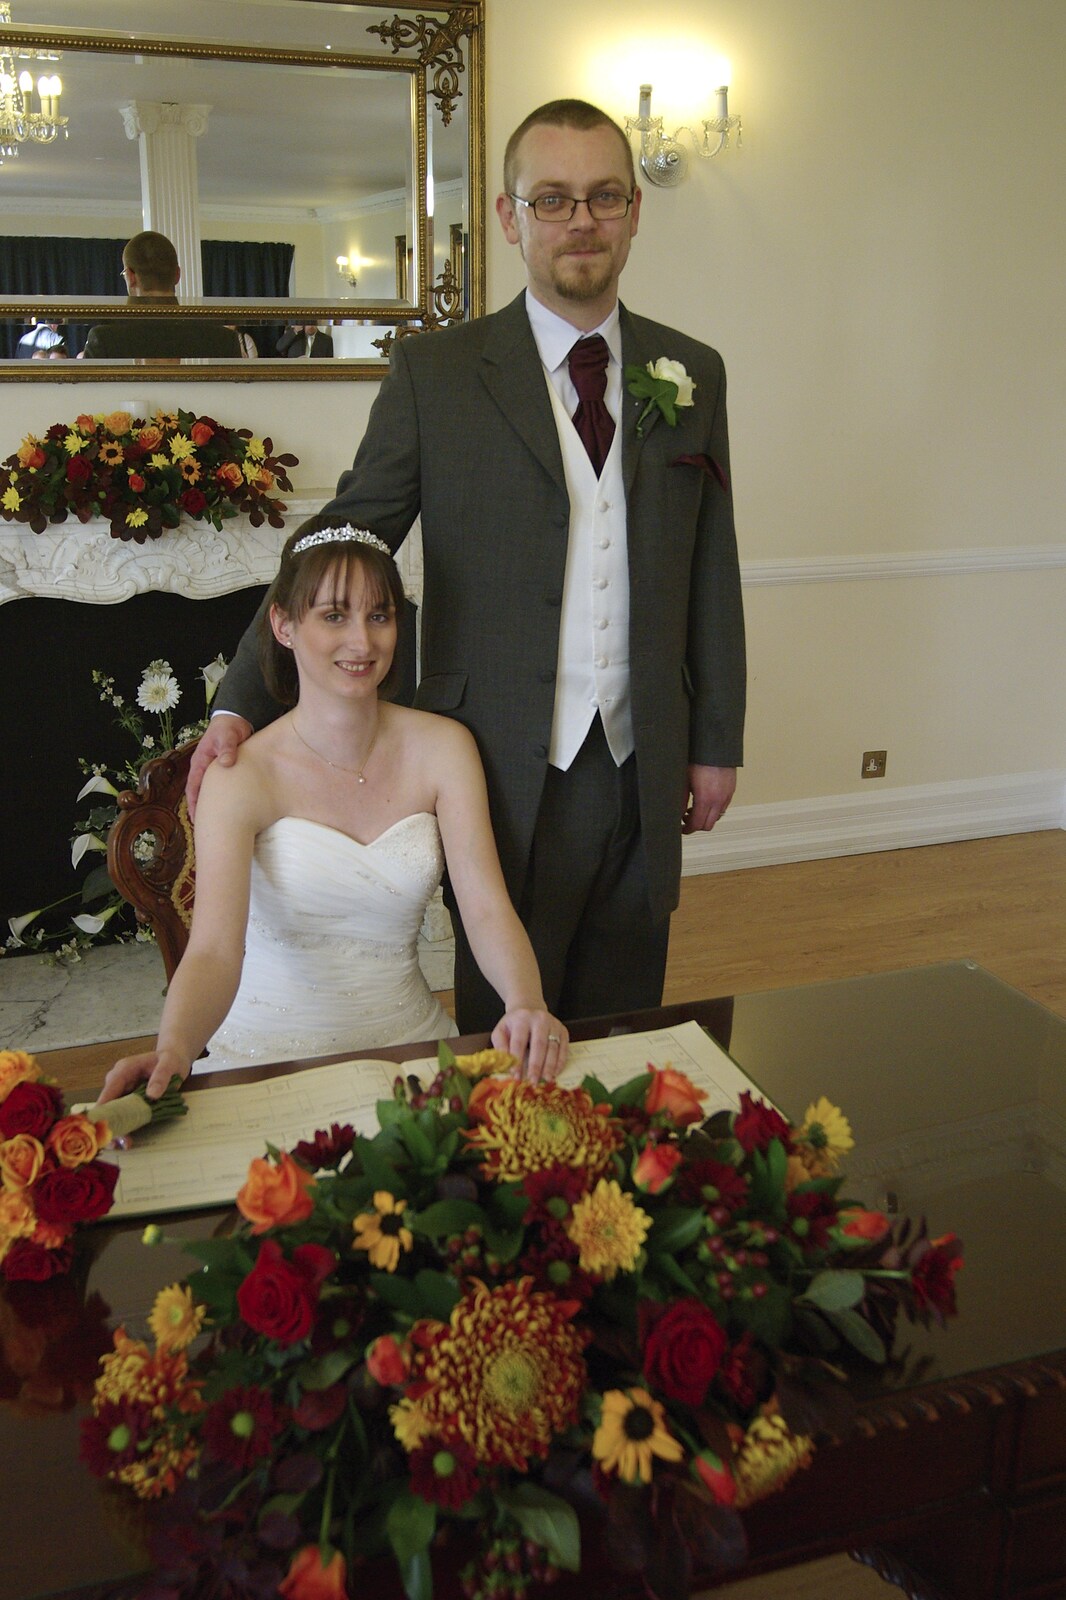 Matt and Emma's Wedding, Quendon, Essex - 7th November 2008: Emma and Matt after the signing of the register